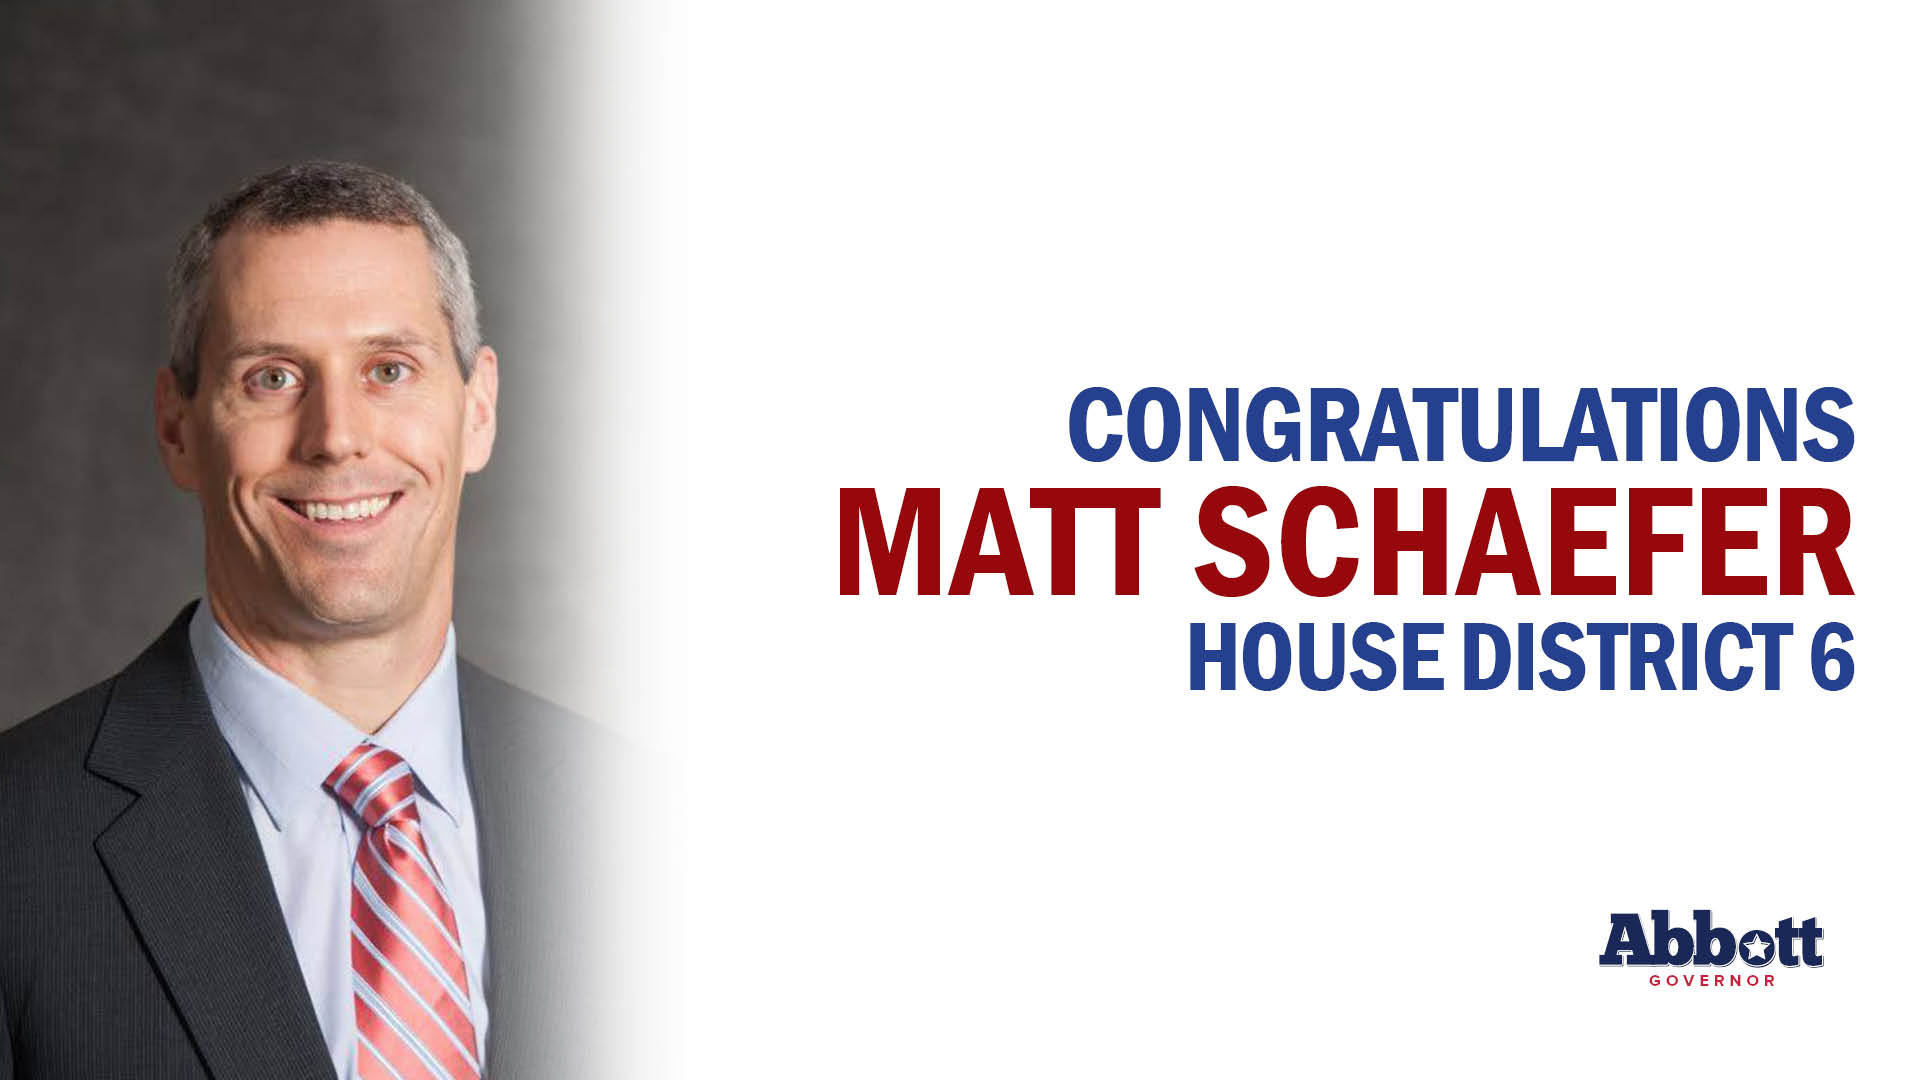 Governor Abbott Congratulates Rep. Matt Schaefer on Re-Election